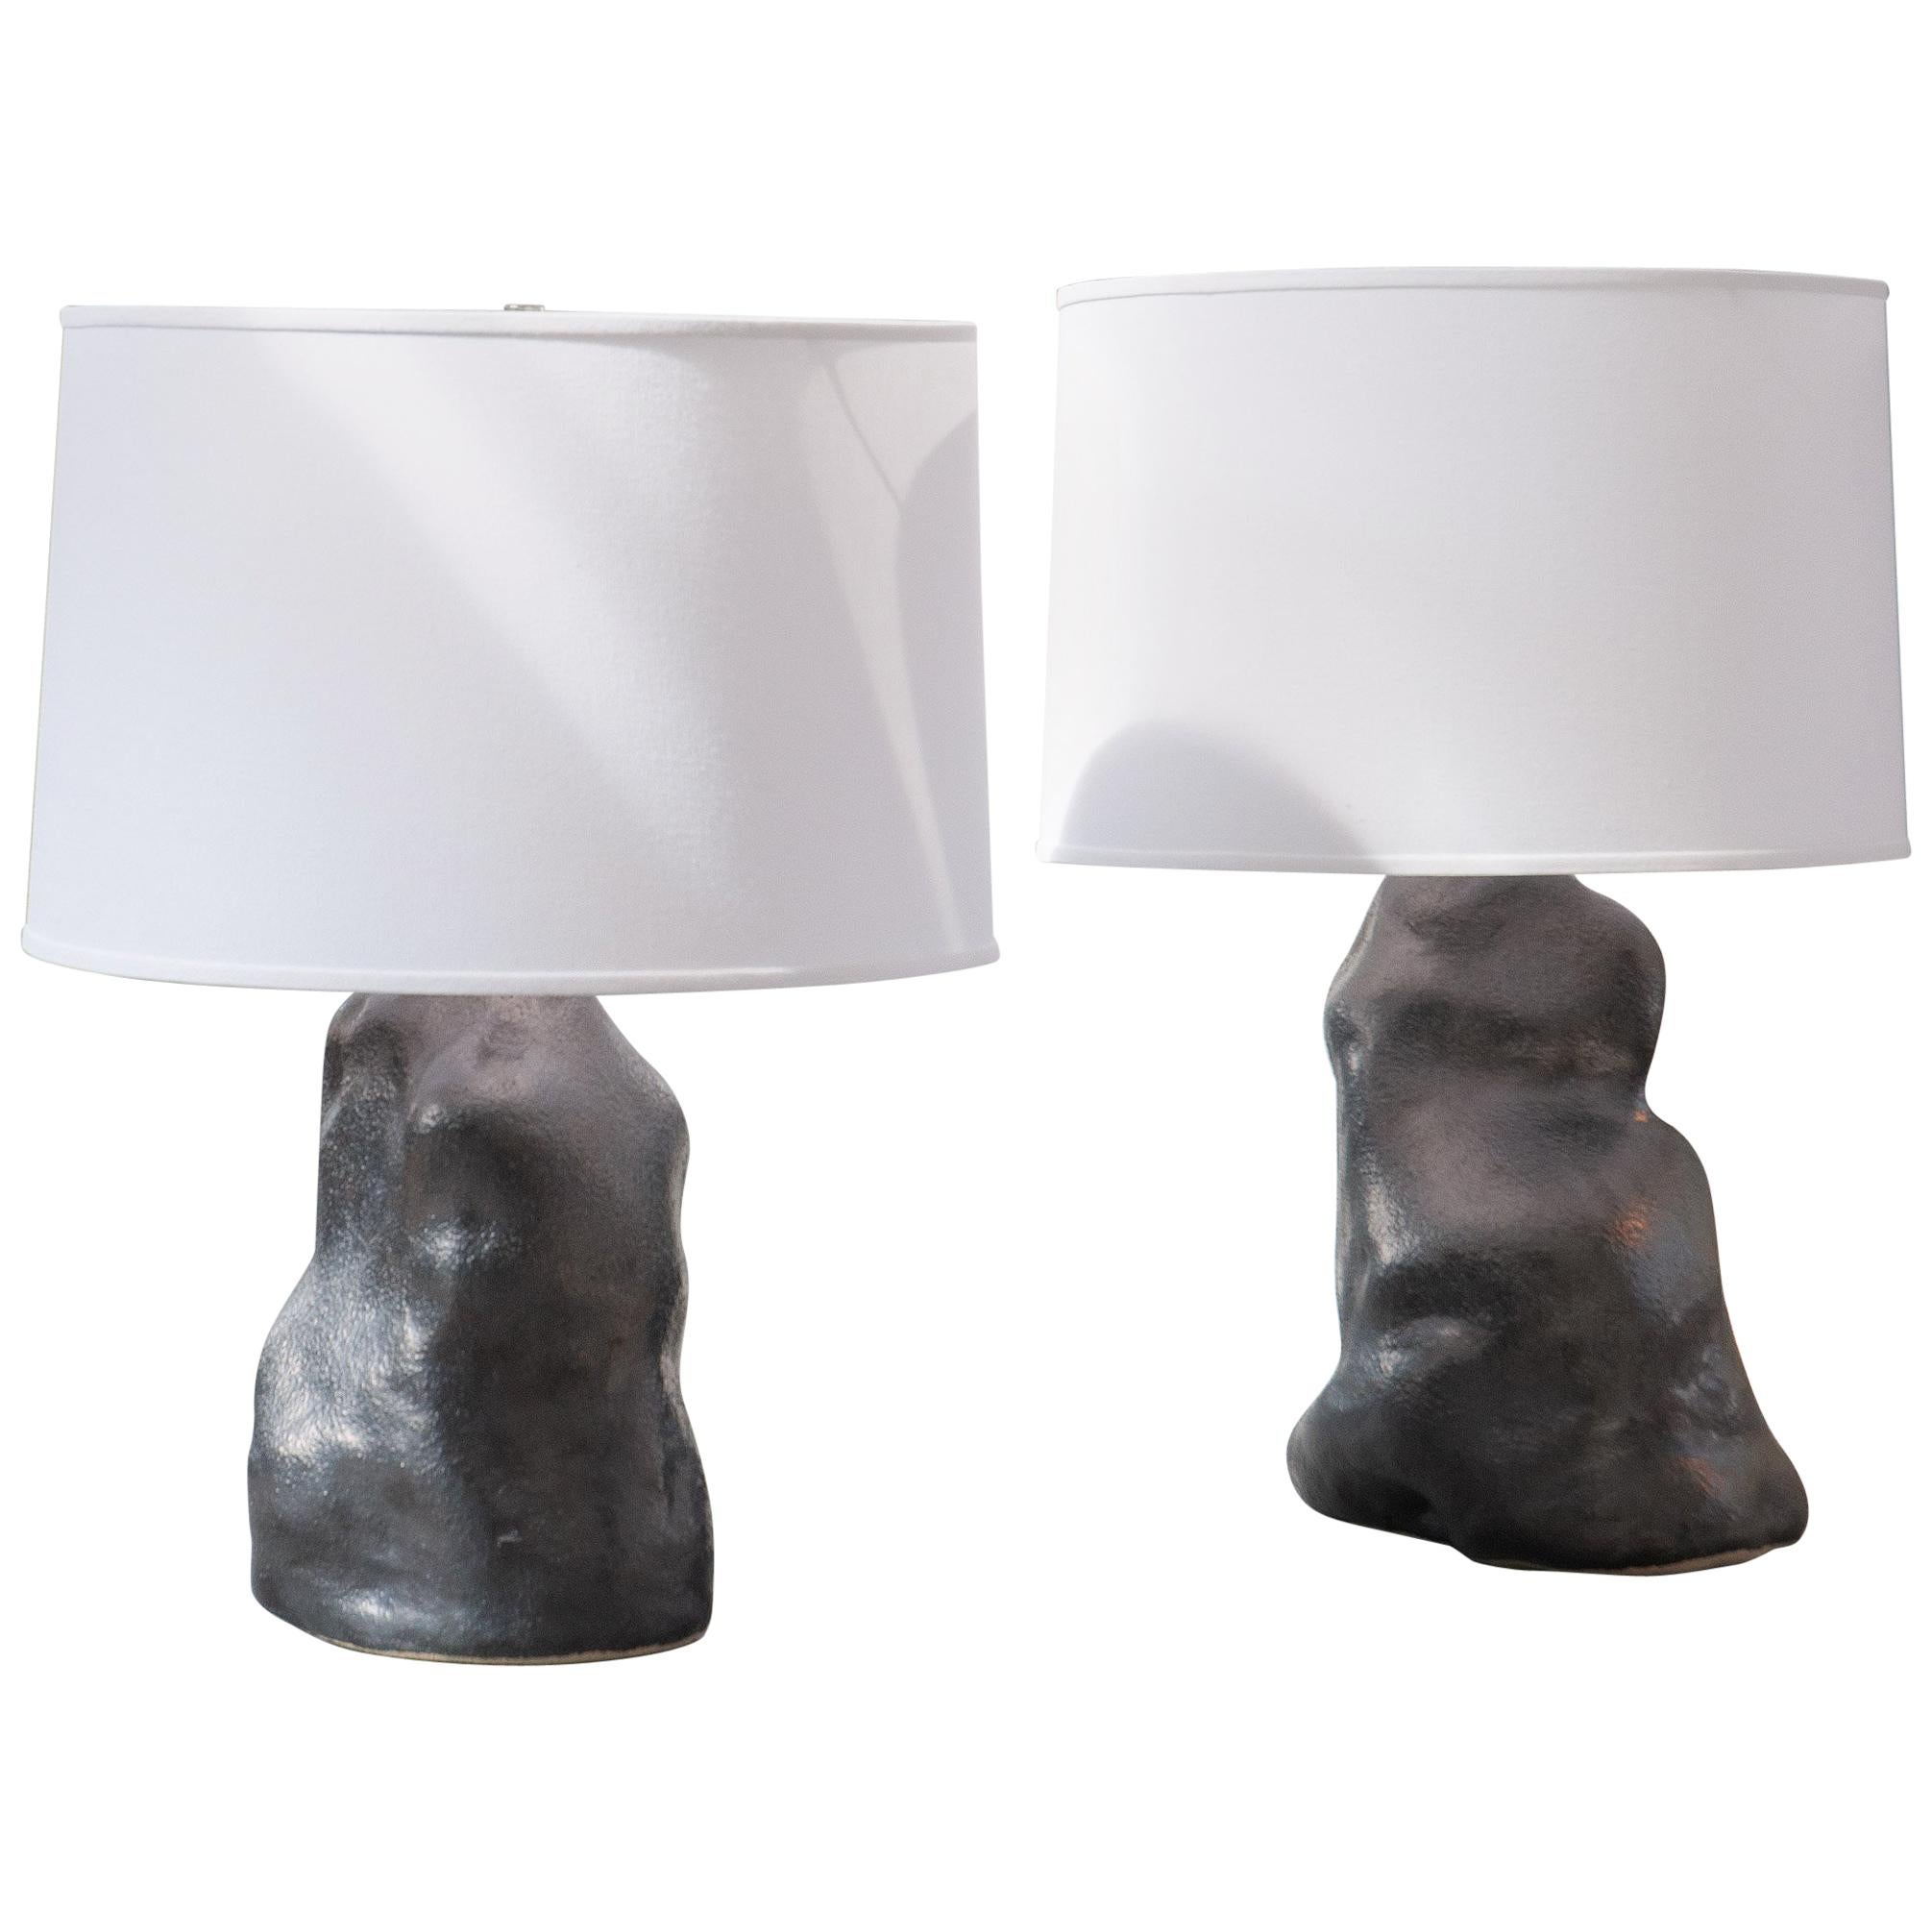 J Schatz Studio 2018 Metallic Black Amorphous Table Lamp Pair, One of a Kind For Sale